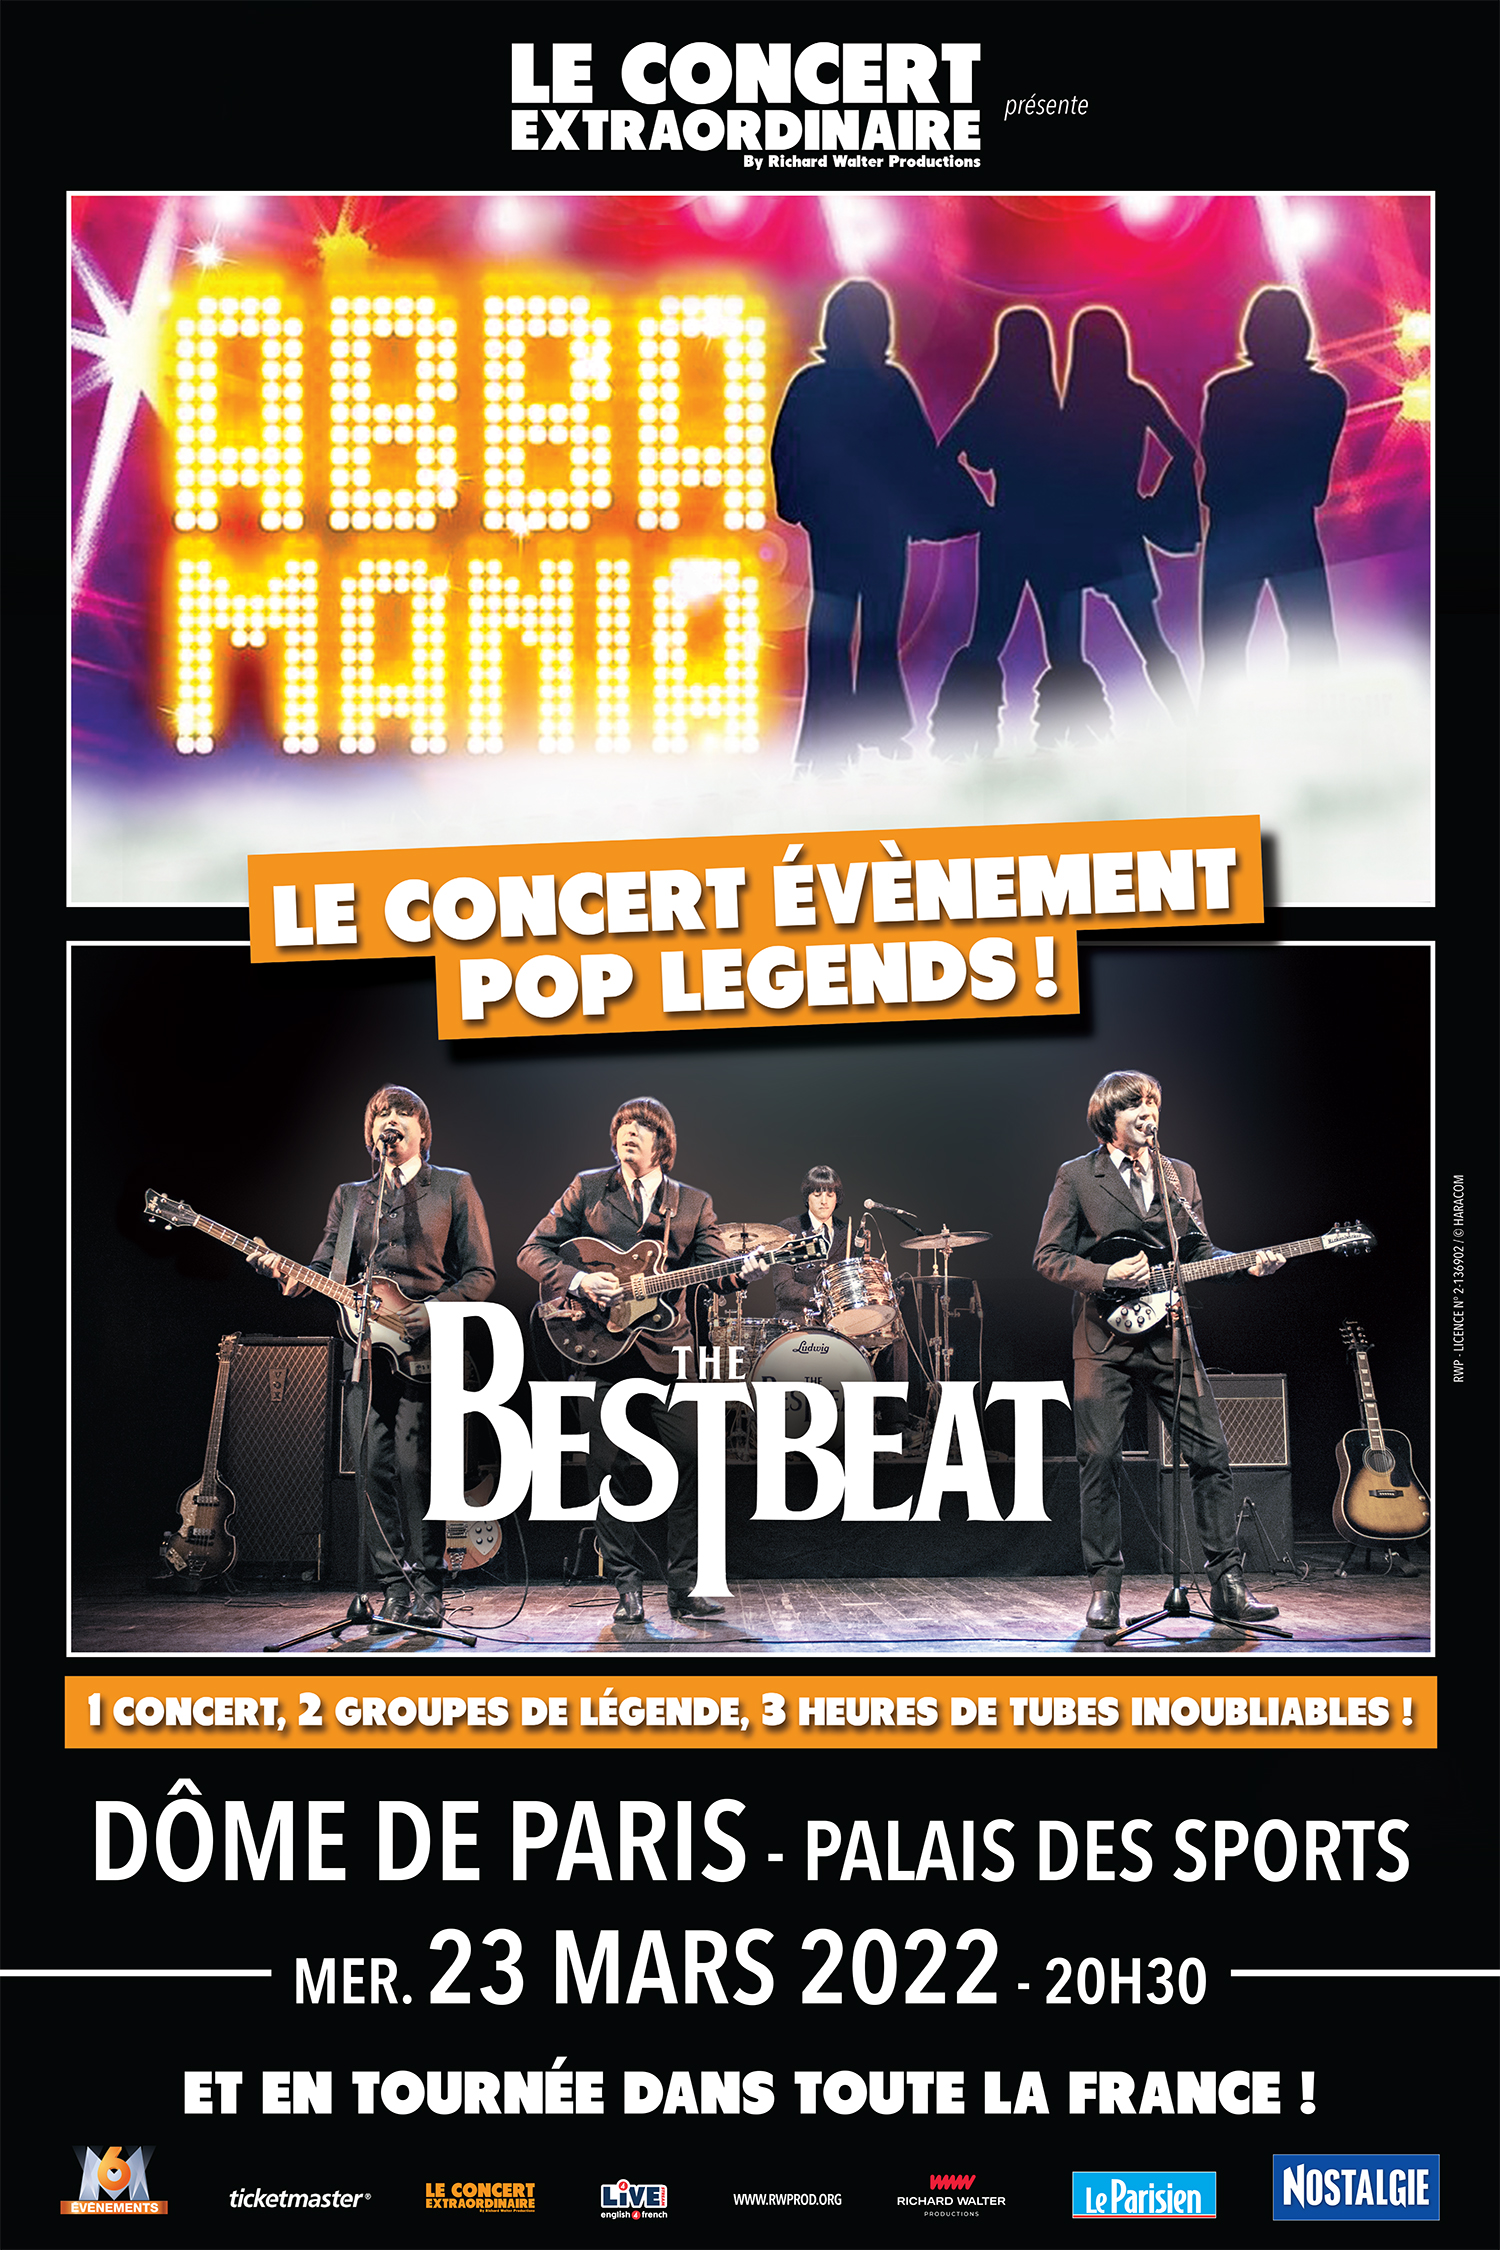 Abba & The Bestbeat